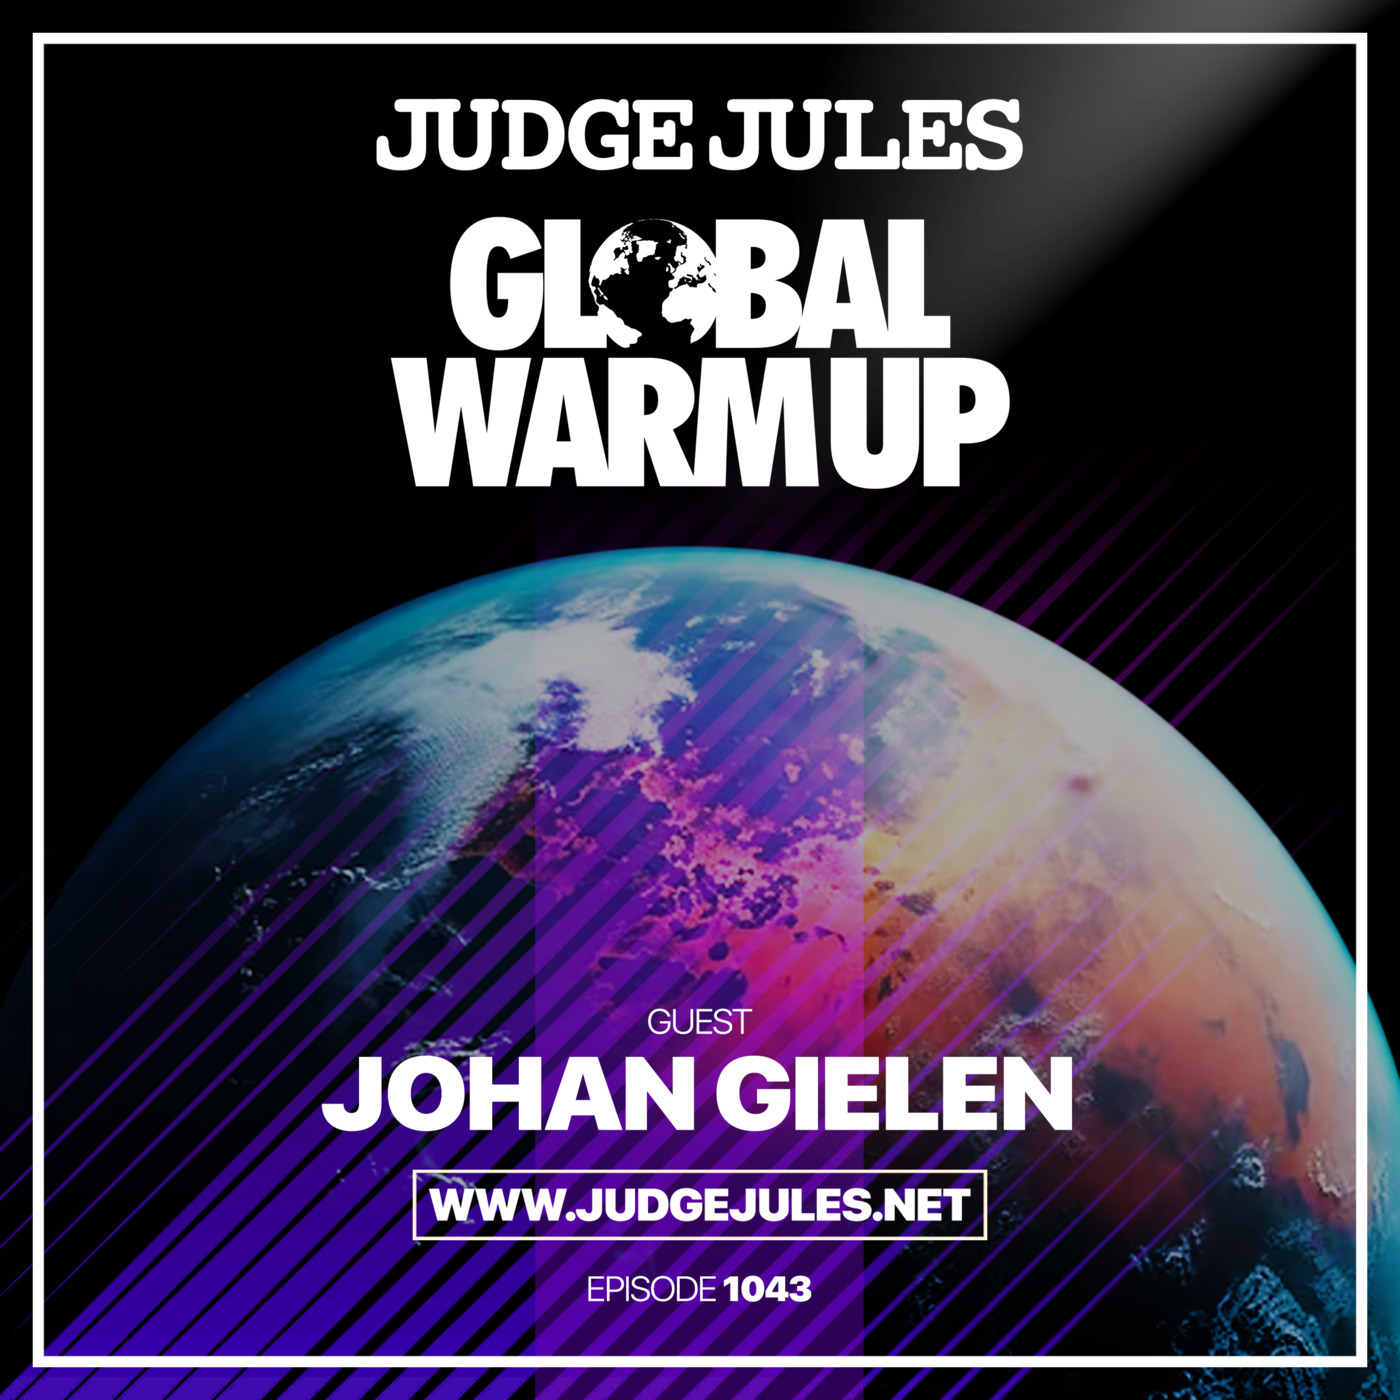 Episode 1043: JUDGE JULES PRESENTS THE GLOBAL WARM UP EPISODE 1043